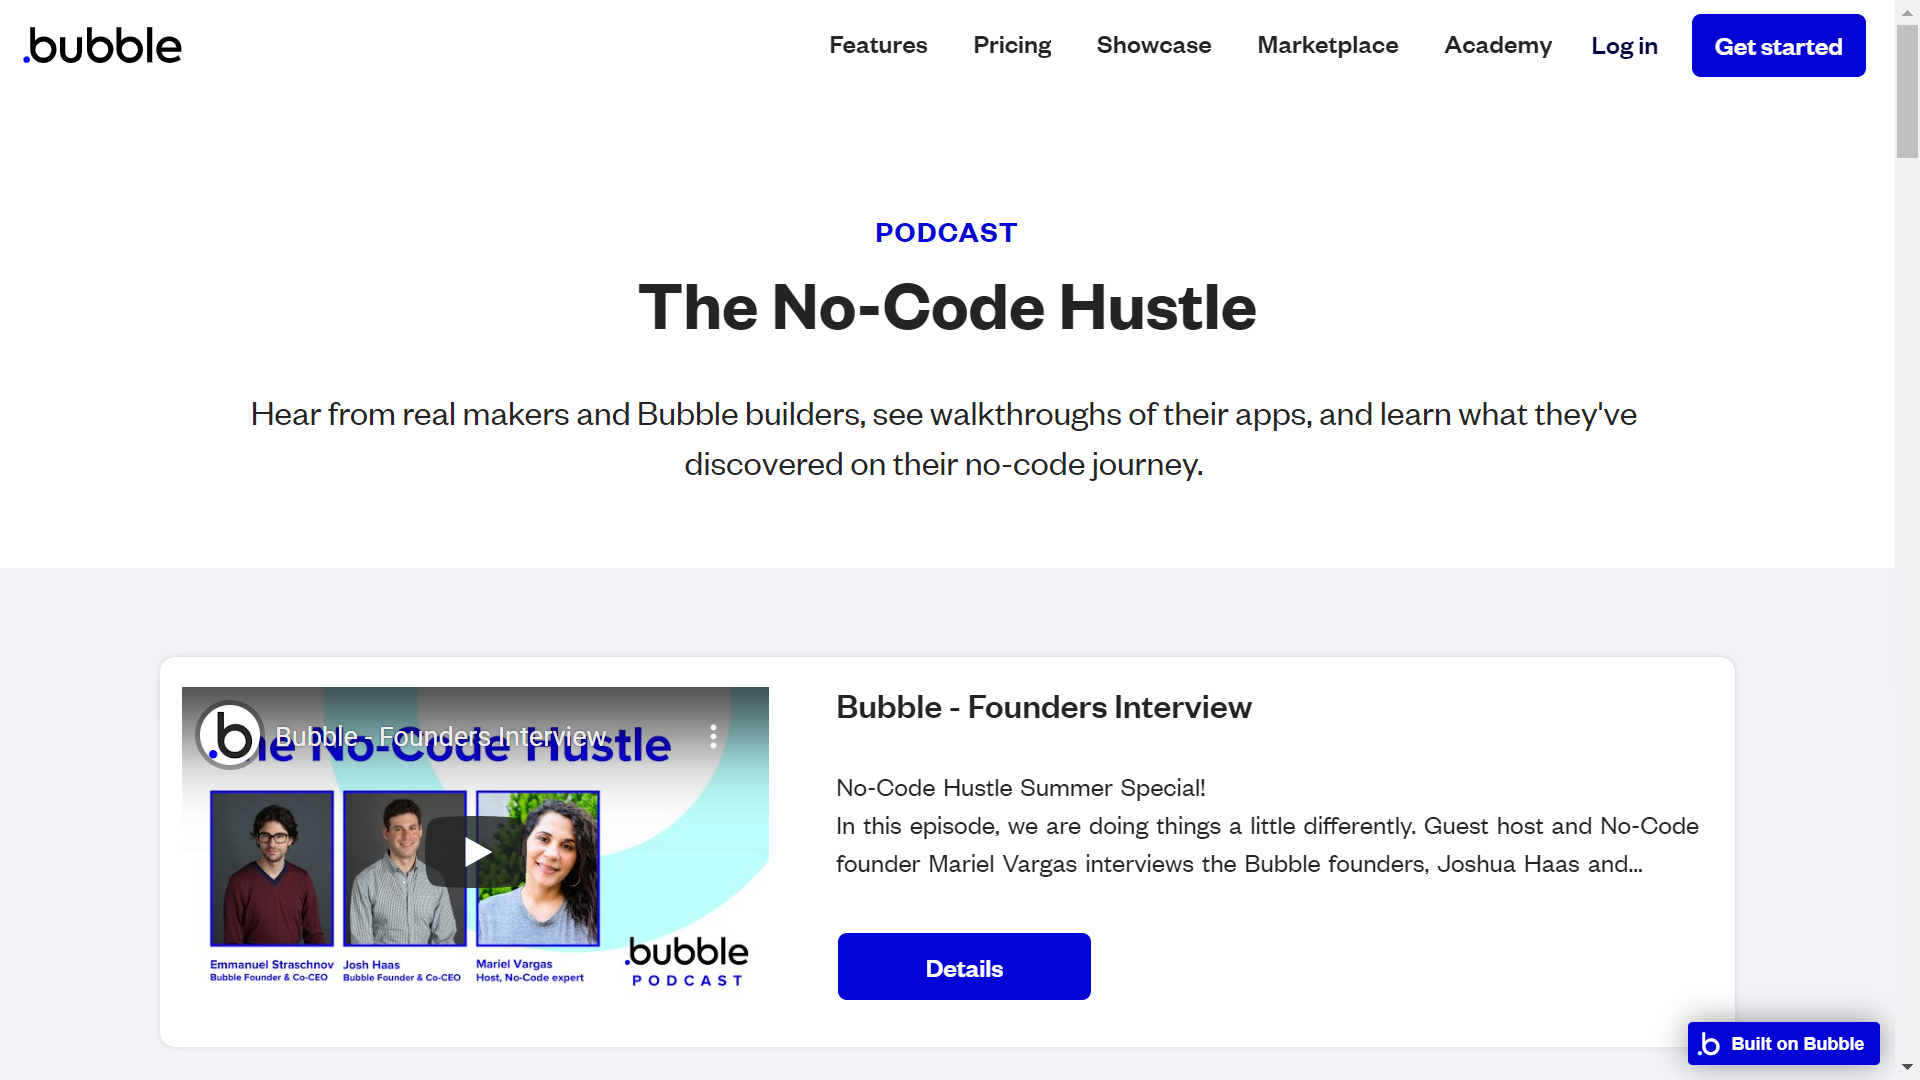 The No-Code Hustle